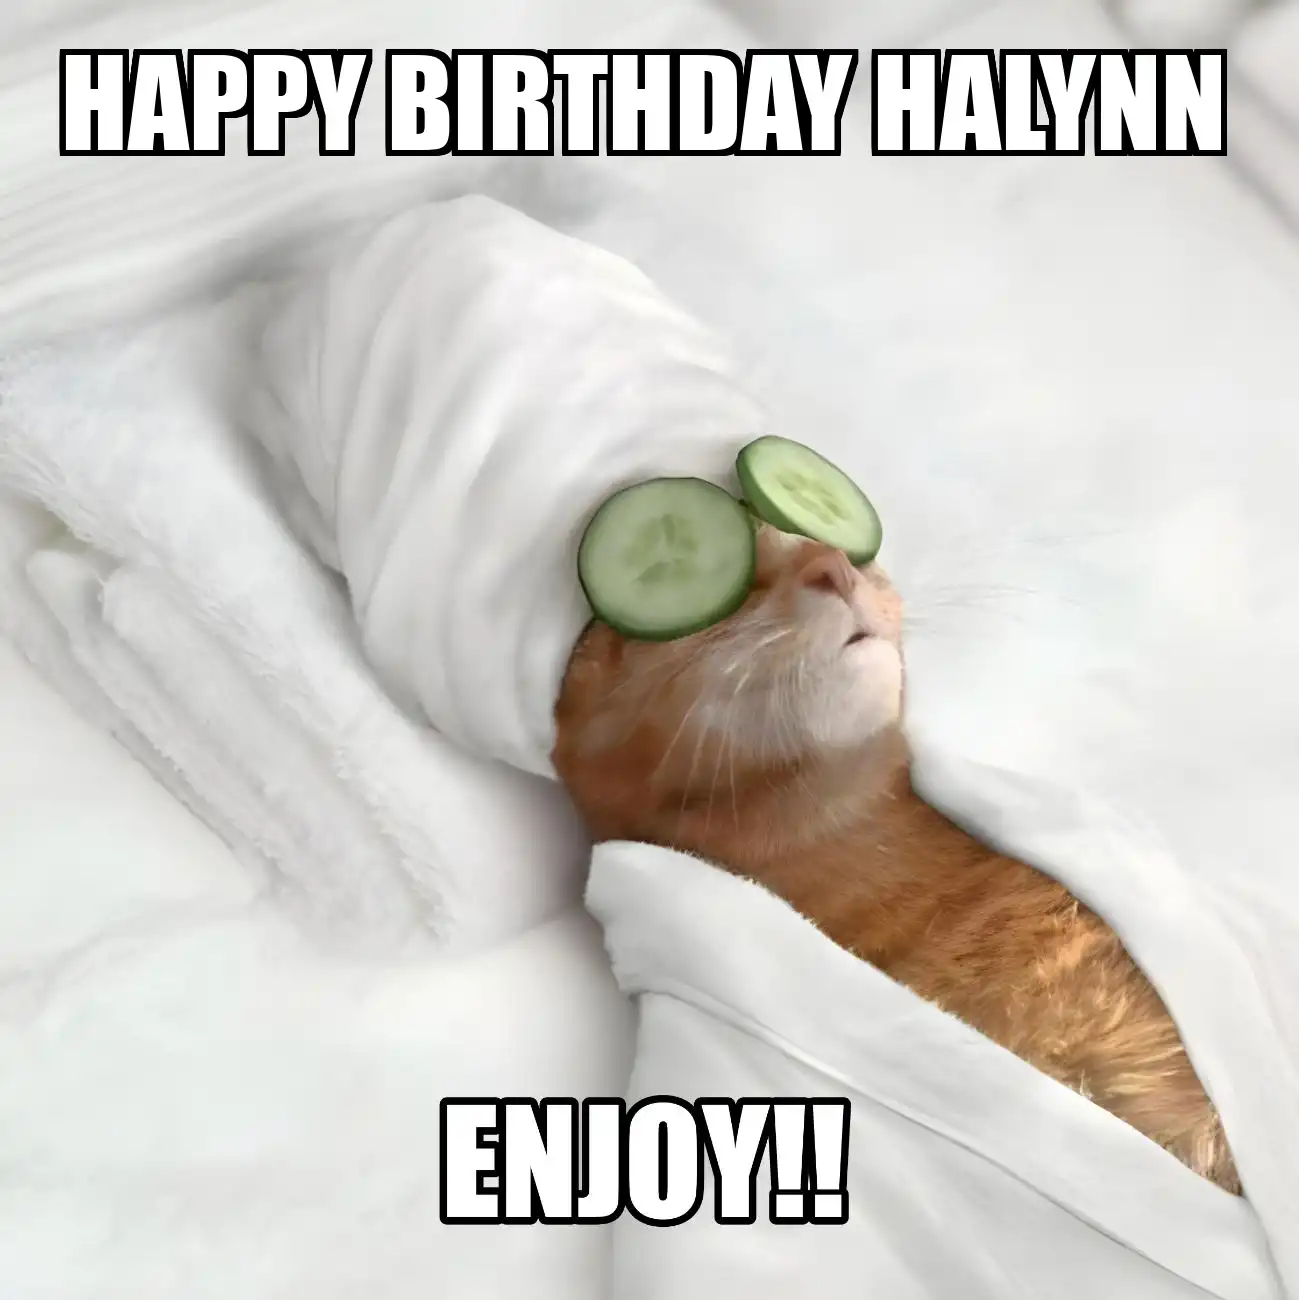 Happy Birthday Halynn Enjoy Cat Meme